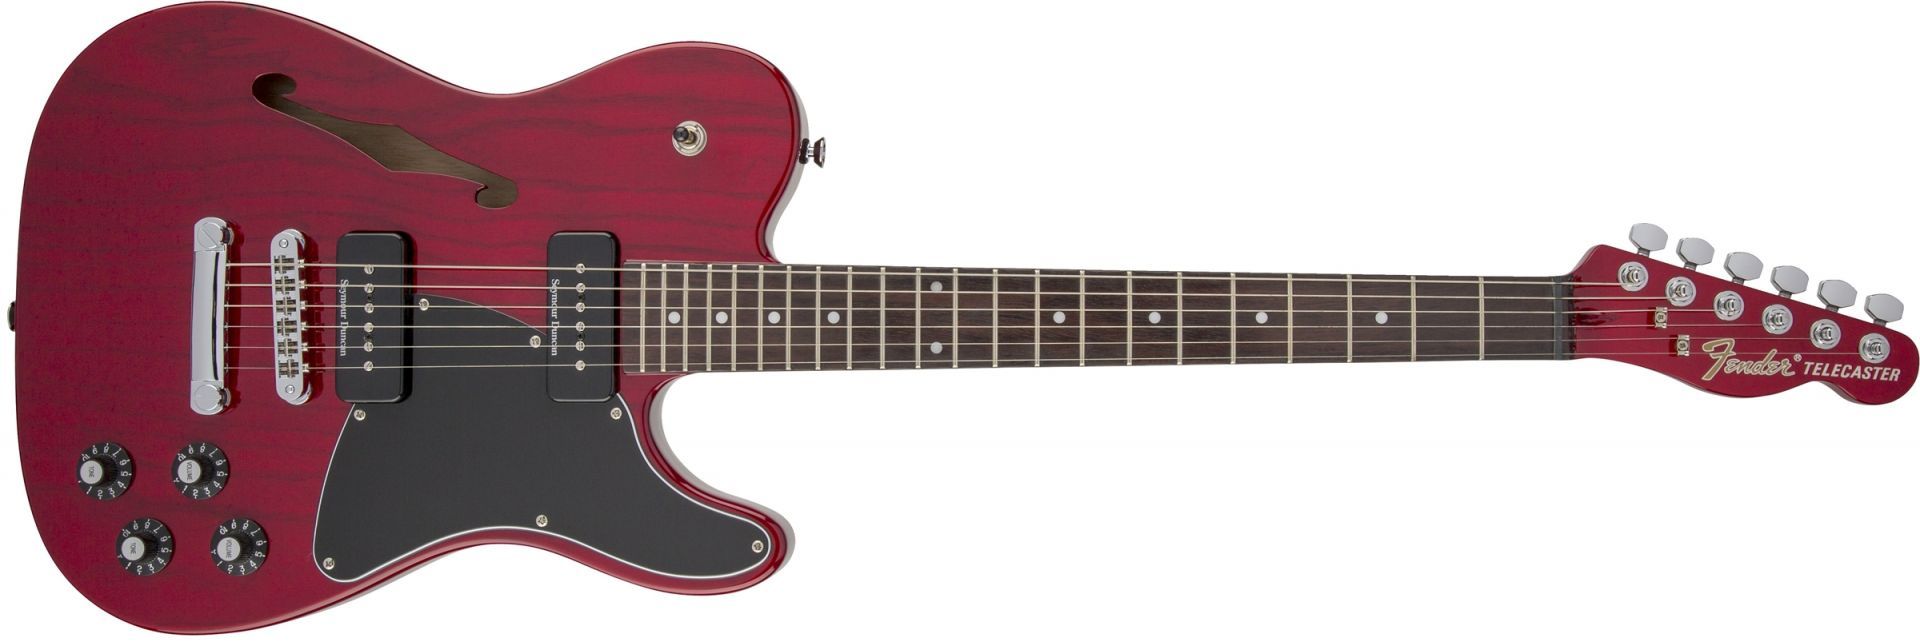 Fender Jim Adkins JA 90 Telecaster Crimson Red Transparent